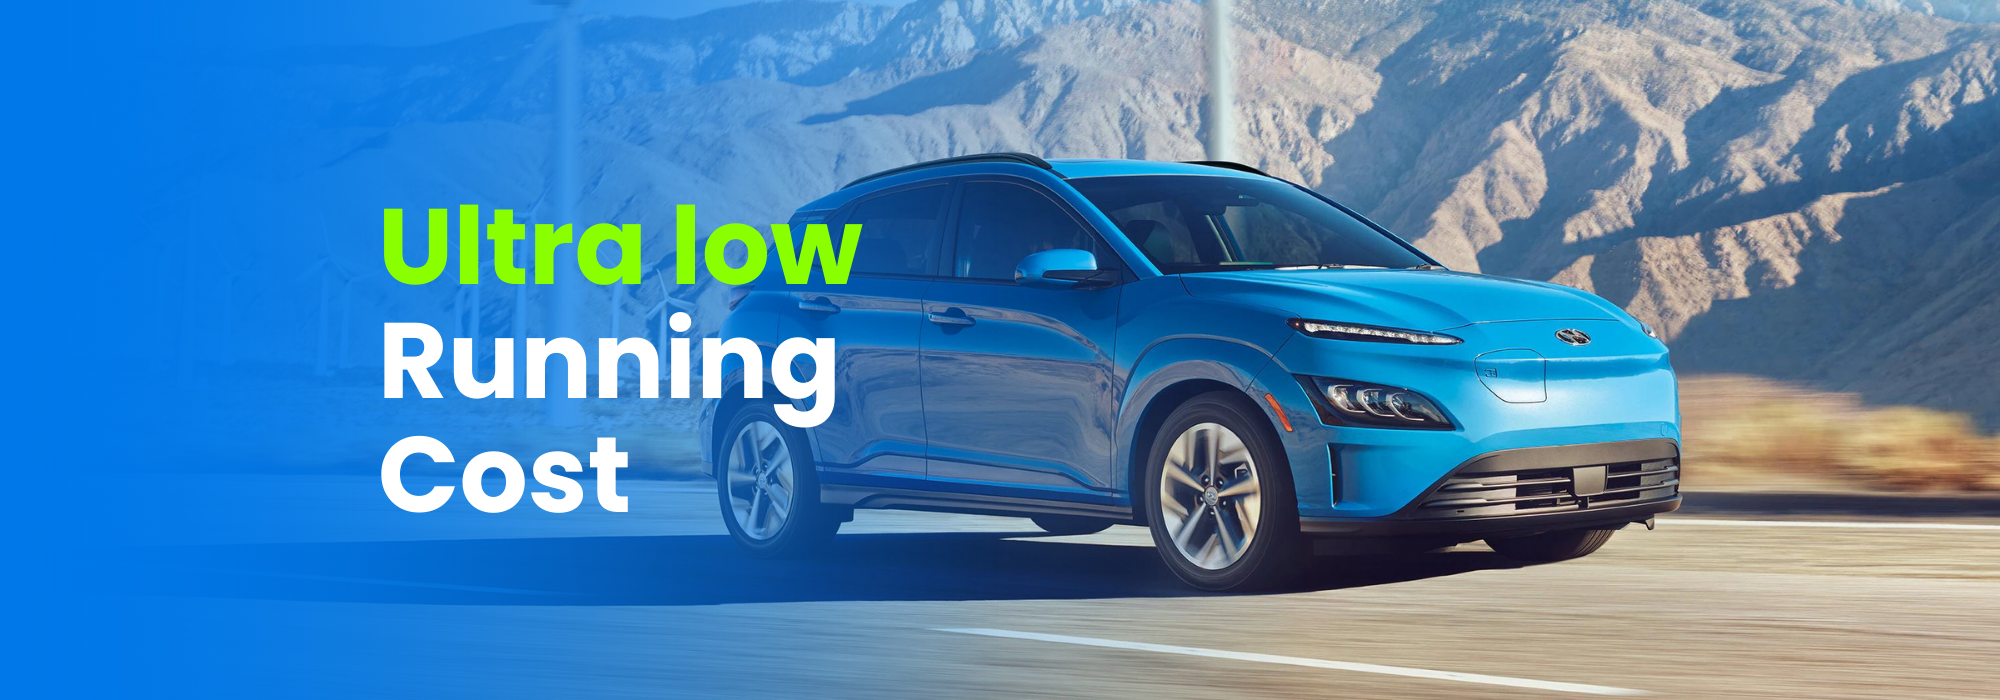 Ultra low running cost Hyundai Kona Premium EV